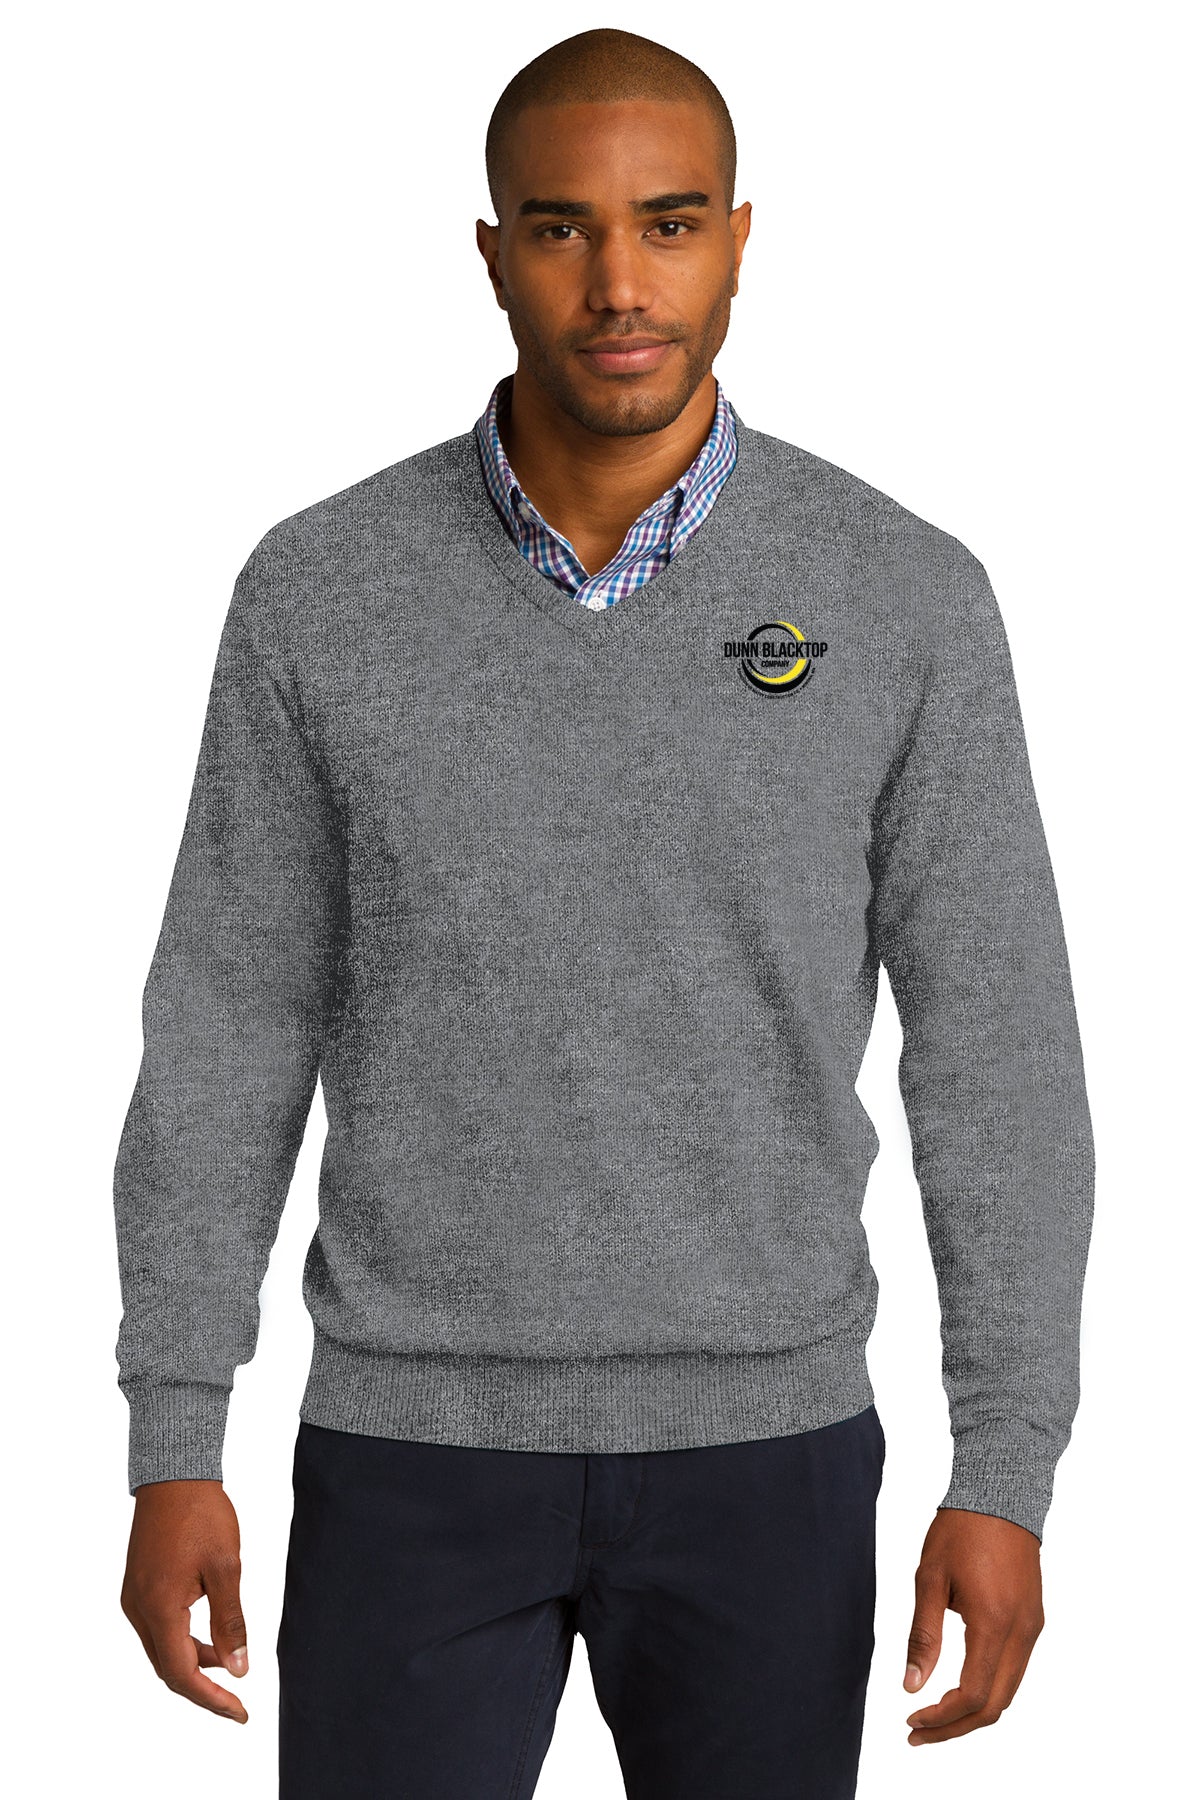 Dunn Blacktop Company V-Neck Sweater